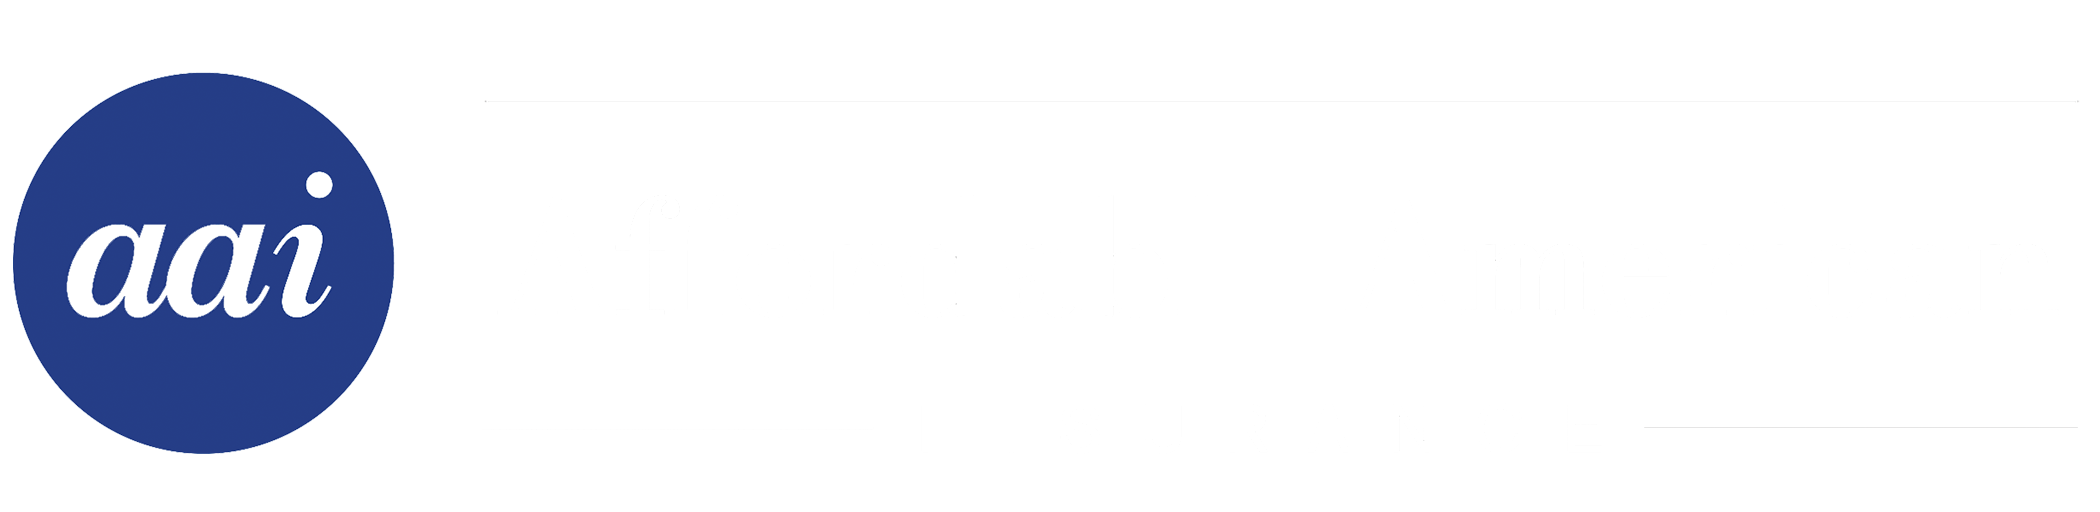 Affordable American Insurance logo